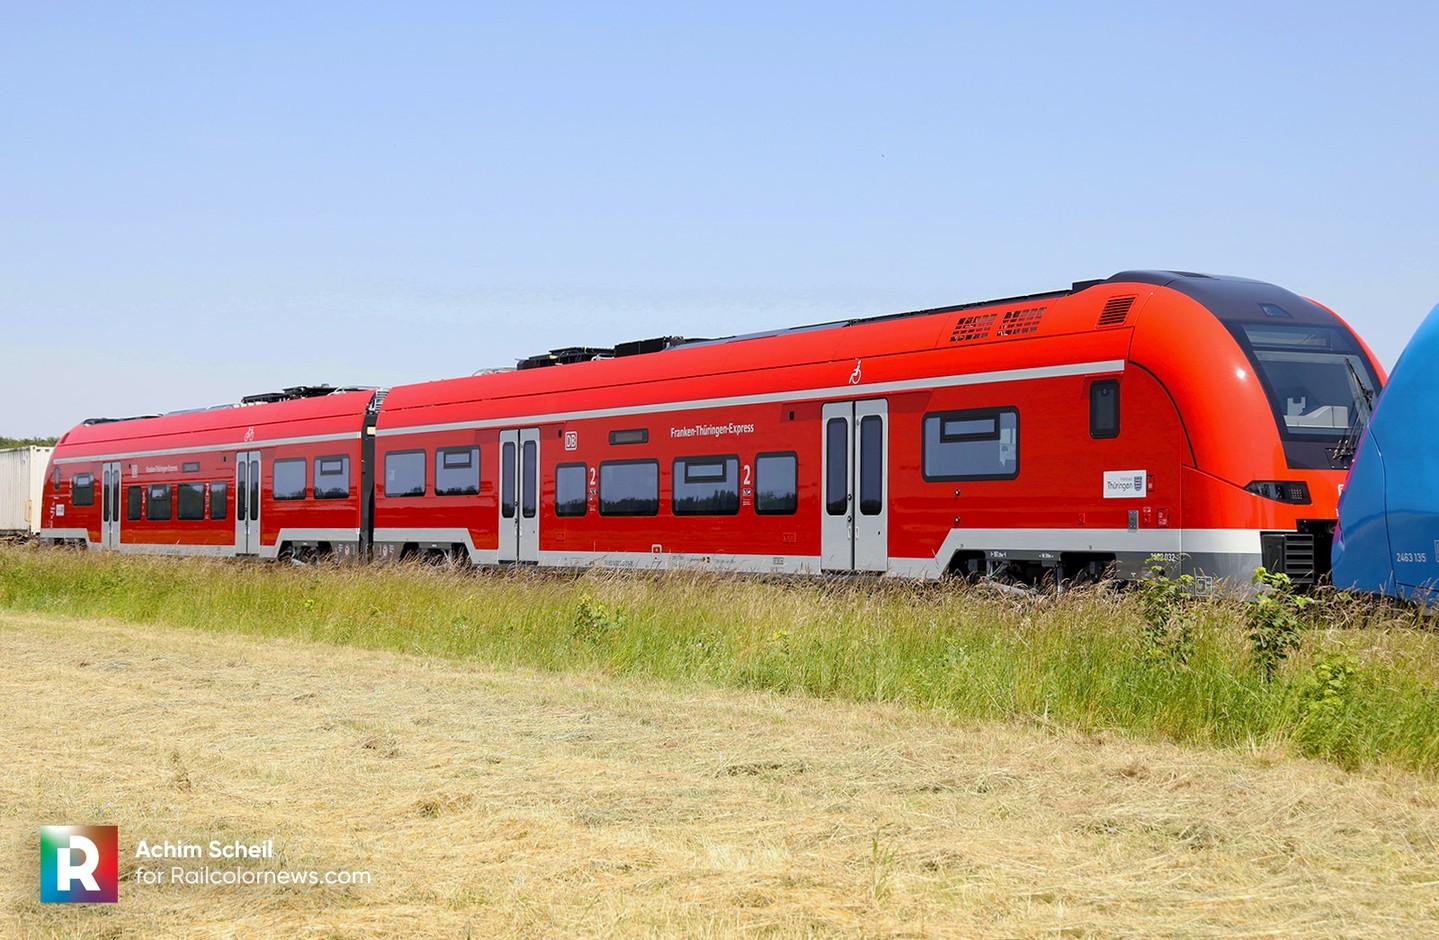 📷 by Achim Scheil 🇩🇪 The real thing: Desiro HC for Franken-Thüringen Express ⬆️ 
‼️Read it now 22% cheaper thanks to code insta22 on all subscriptions, tribute to all of our 22,000 followers‼️
.
.
.
.
#siemens #siemens_mobility #siemensdesiro #desirohc #siemensdesiroHC #DB #DeutscheBahn #EMU #electricmultipleunit #eisenbahnfotografie #railwayphotography #railcolornews #railcolor #WegbergWildenrath #instatrain #trainstagram #trains #railways #BahnlandBayern #FrankenThuringenExpress #SiemensKrefeld #FreistaatThüringen #FrankenThüringenExpress